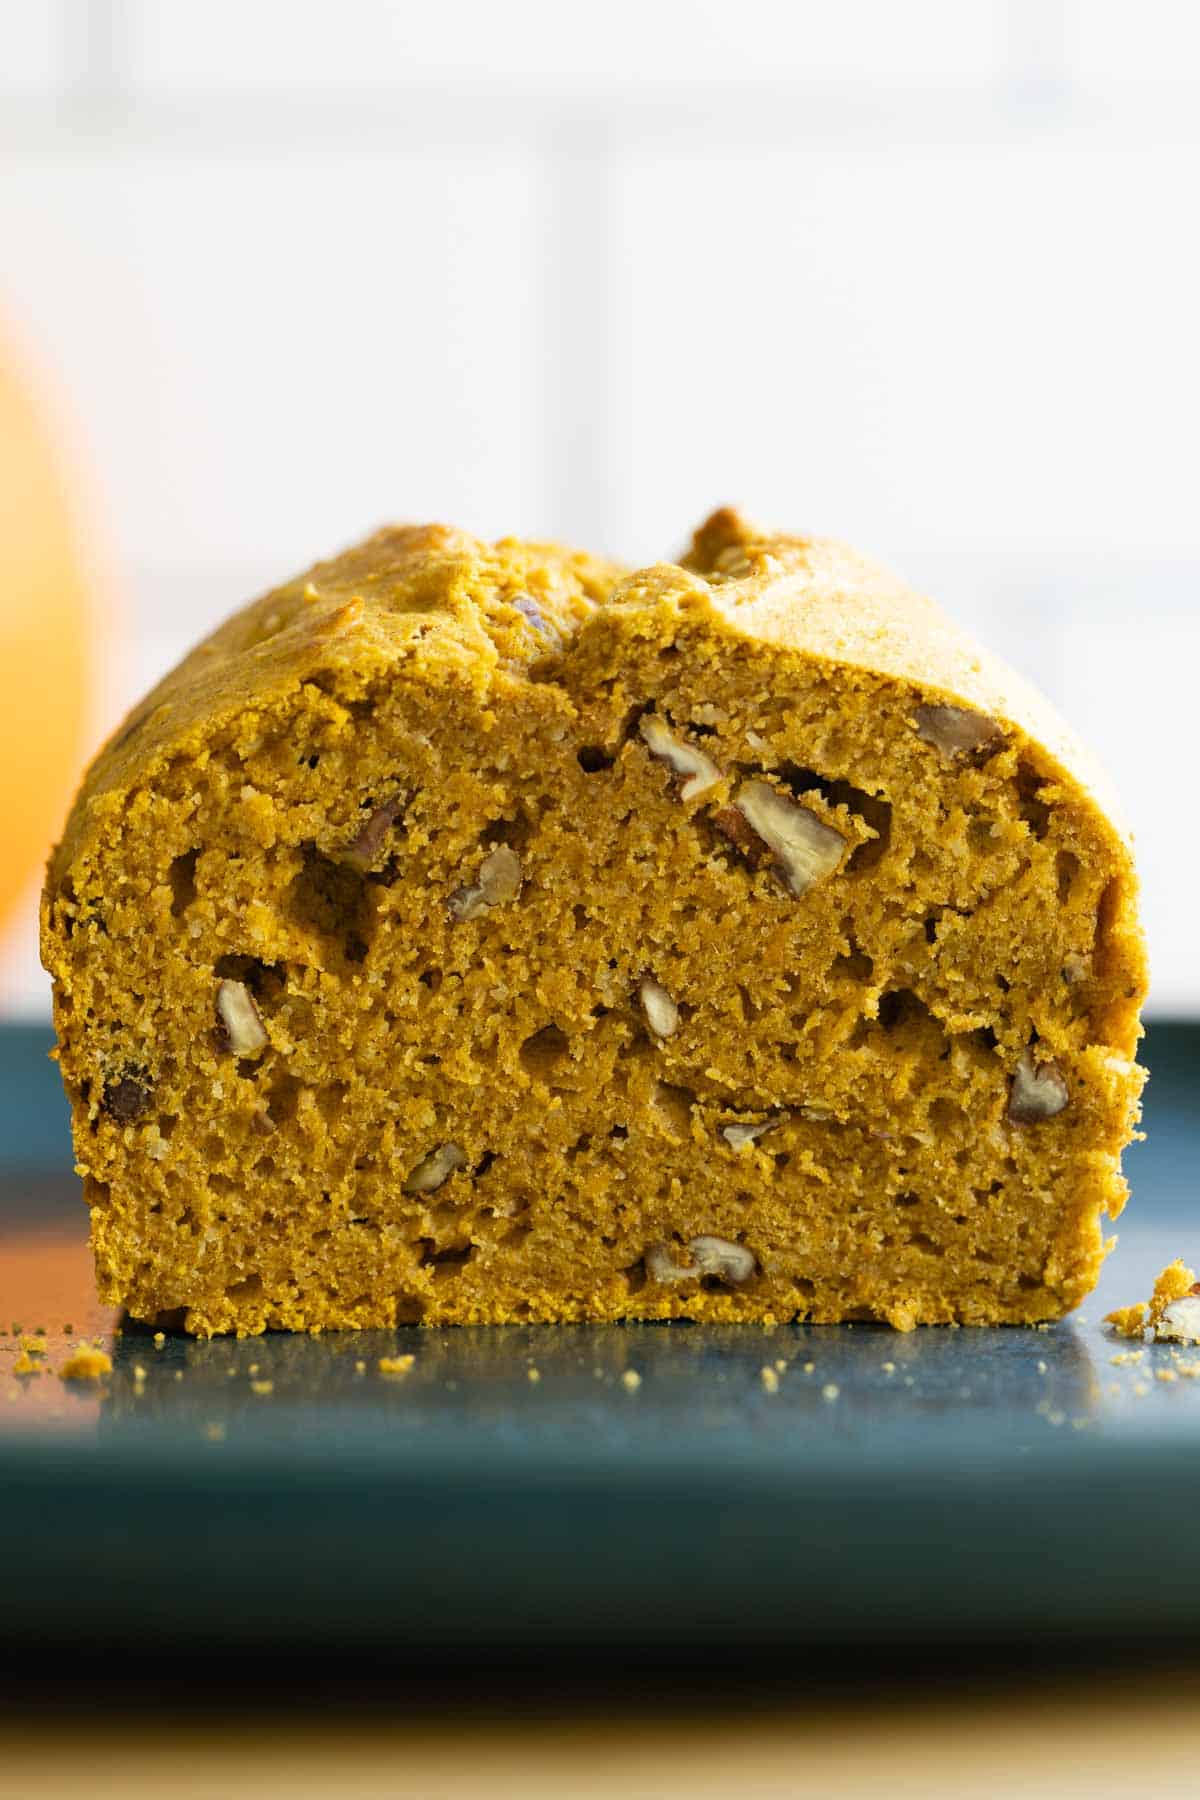 Closeup showing texture of cut open pumpkin bread.